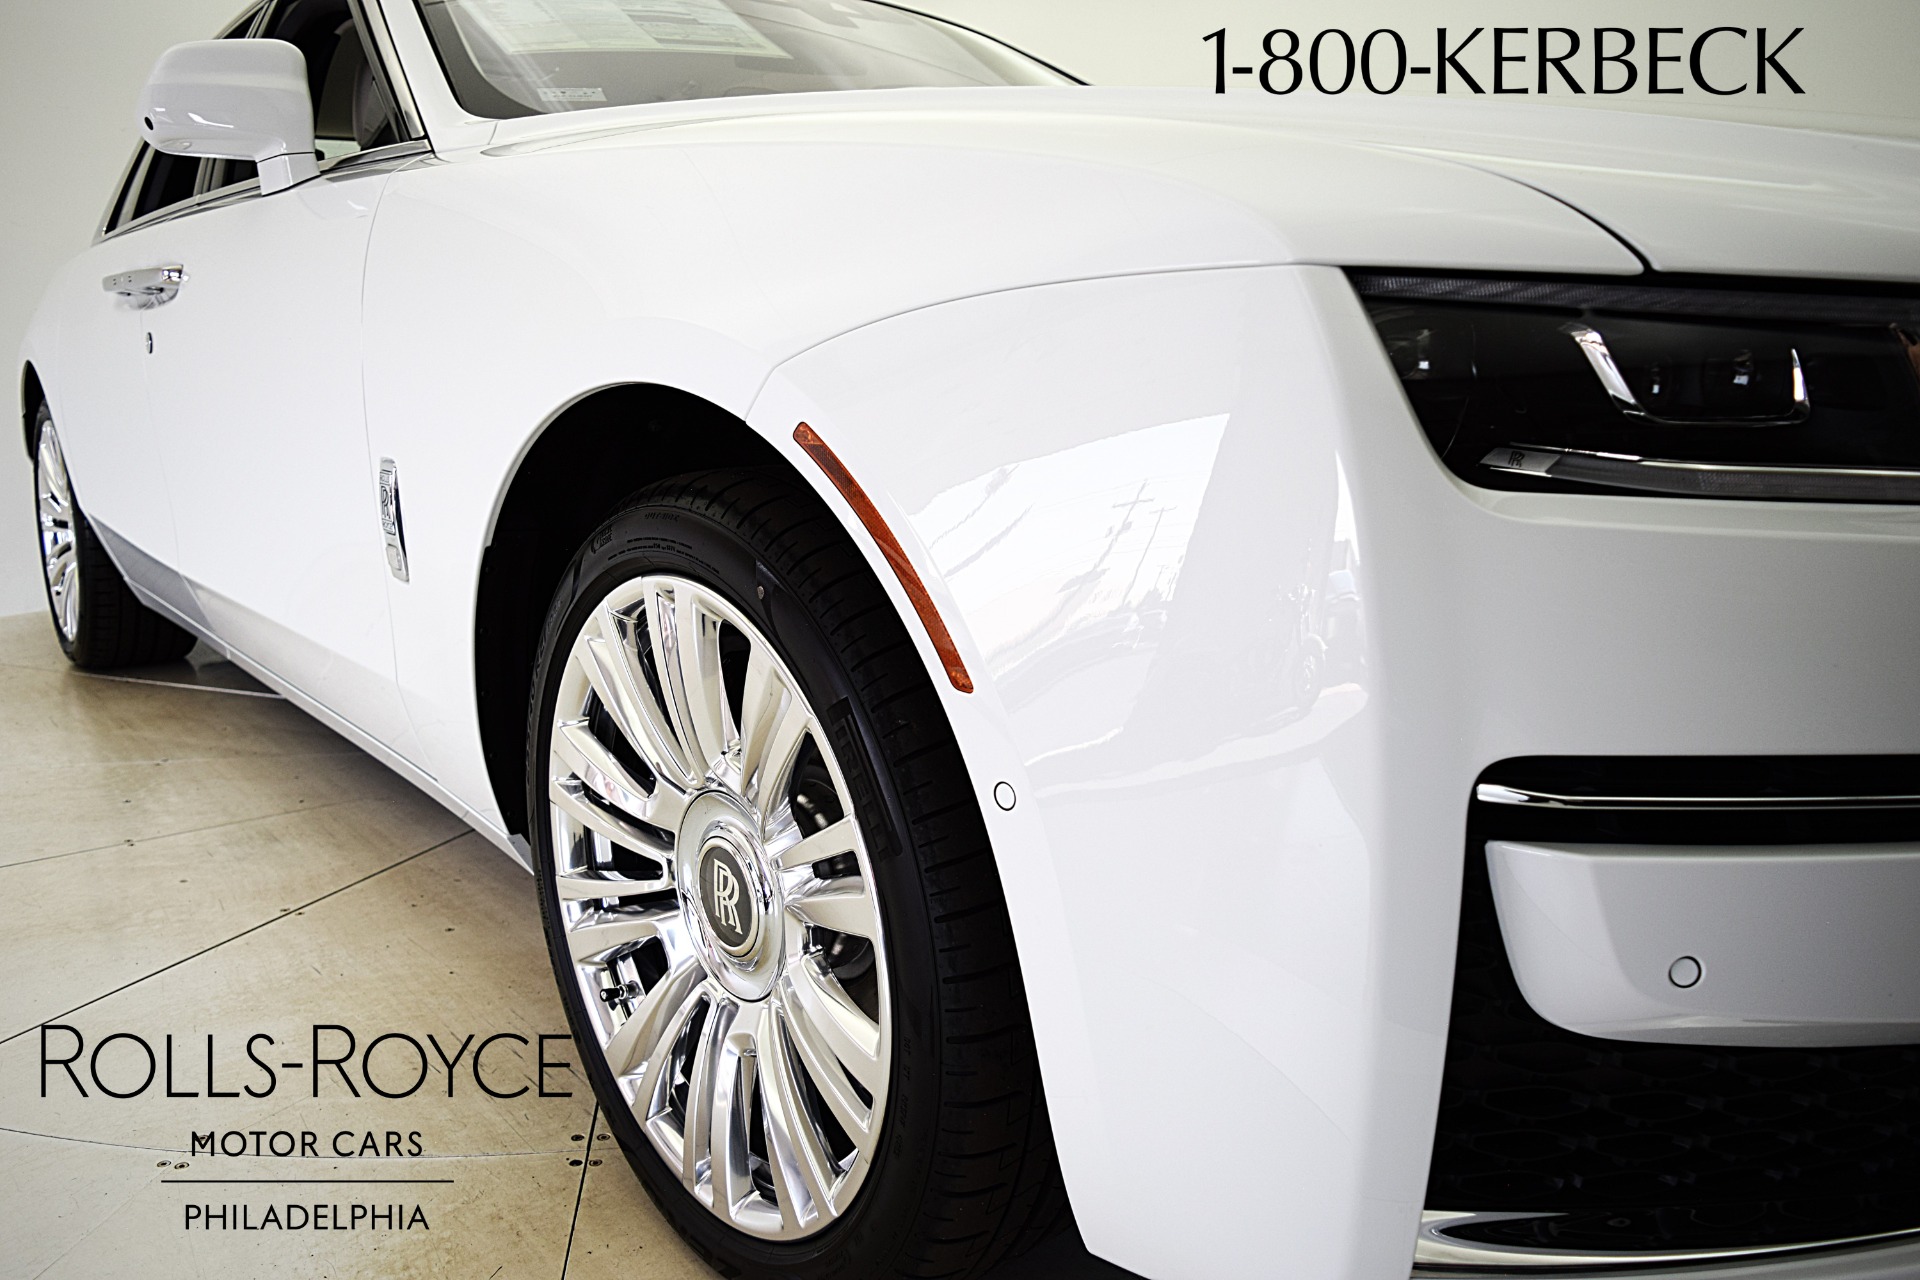 New 2023 Rolls-Royce Ghost For Sale ($386,800)  Rolls-Royce Motor Cars  Philadelphia Stock #23R127